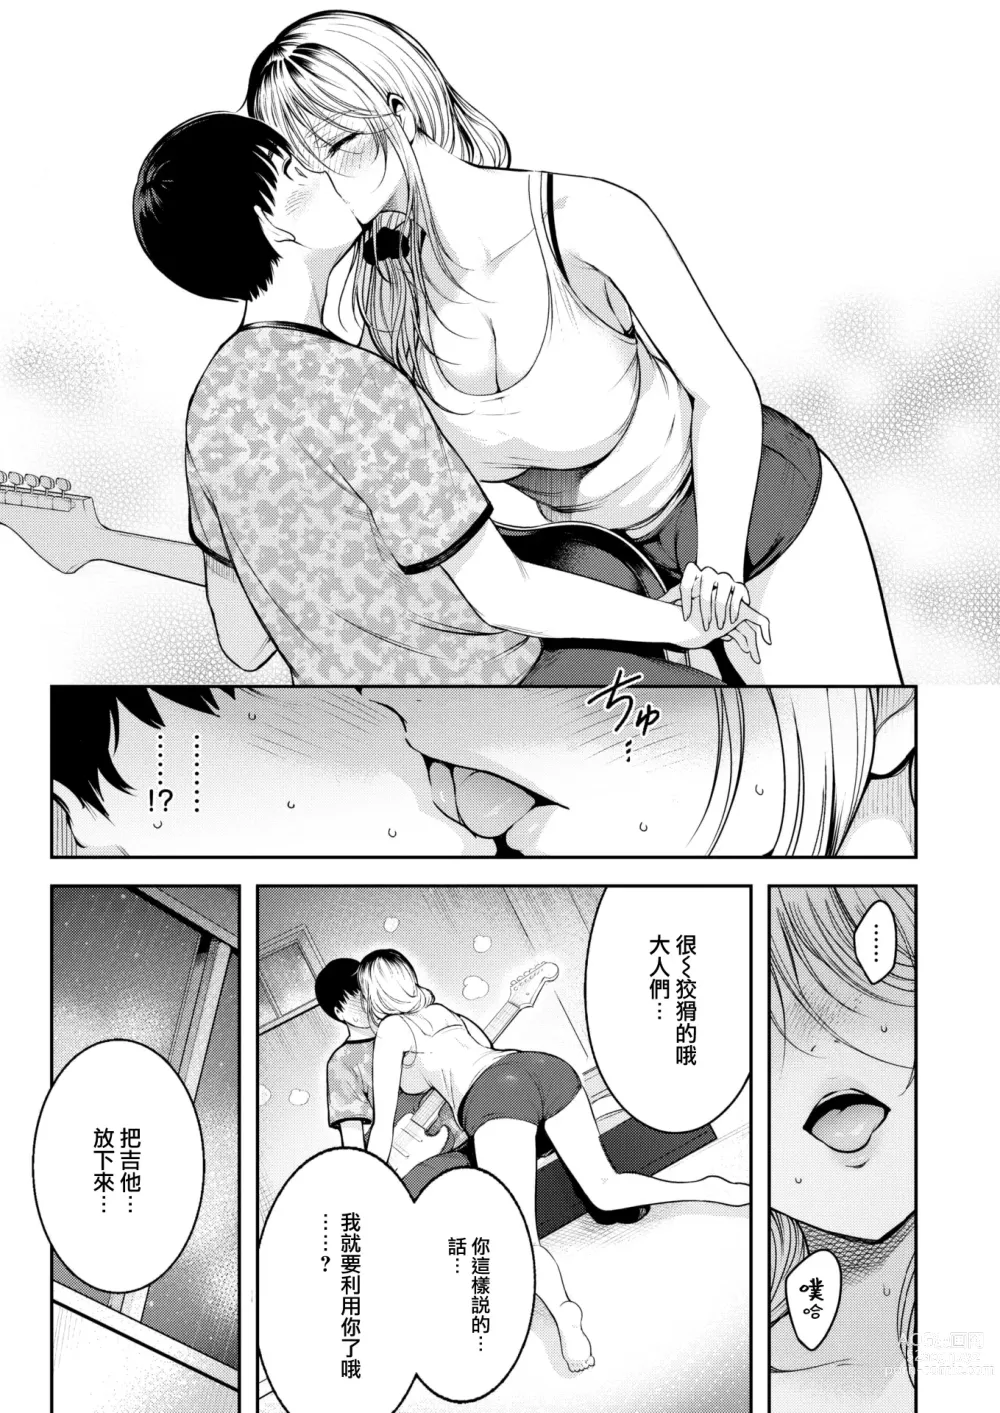 Page 10 of manga RAINY DROP